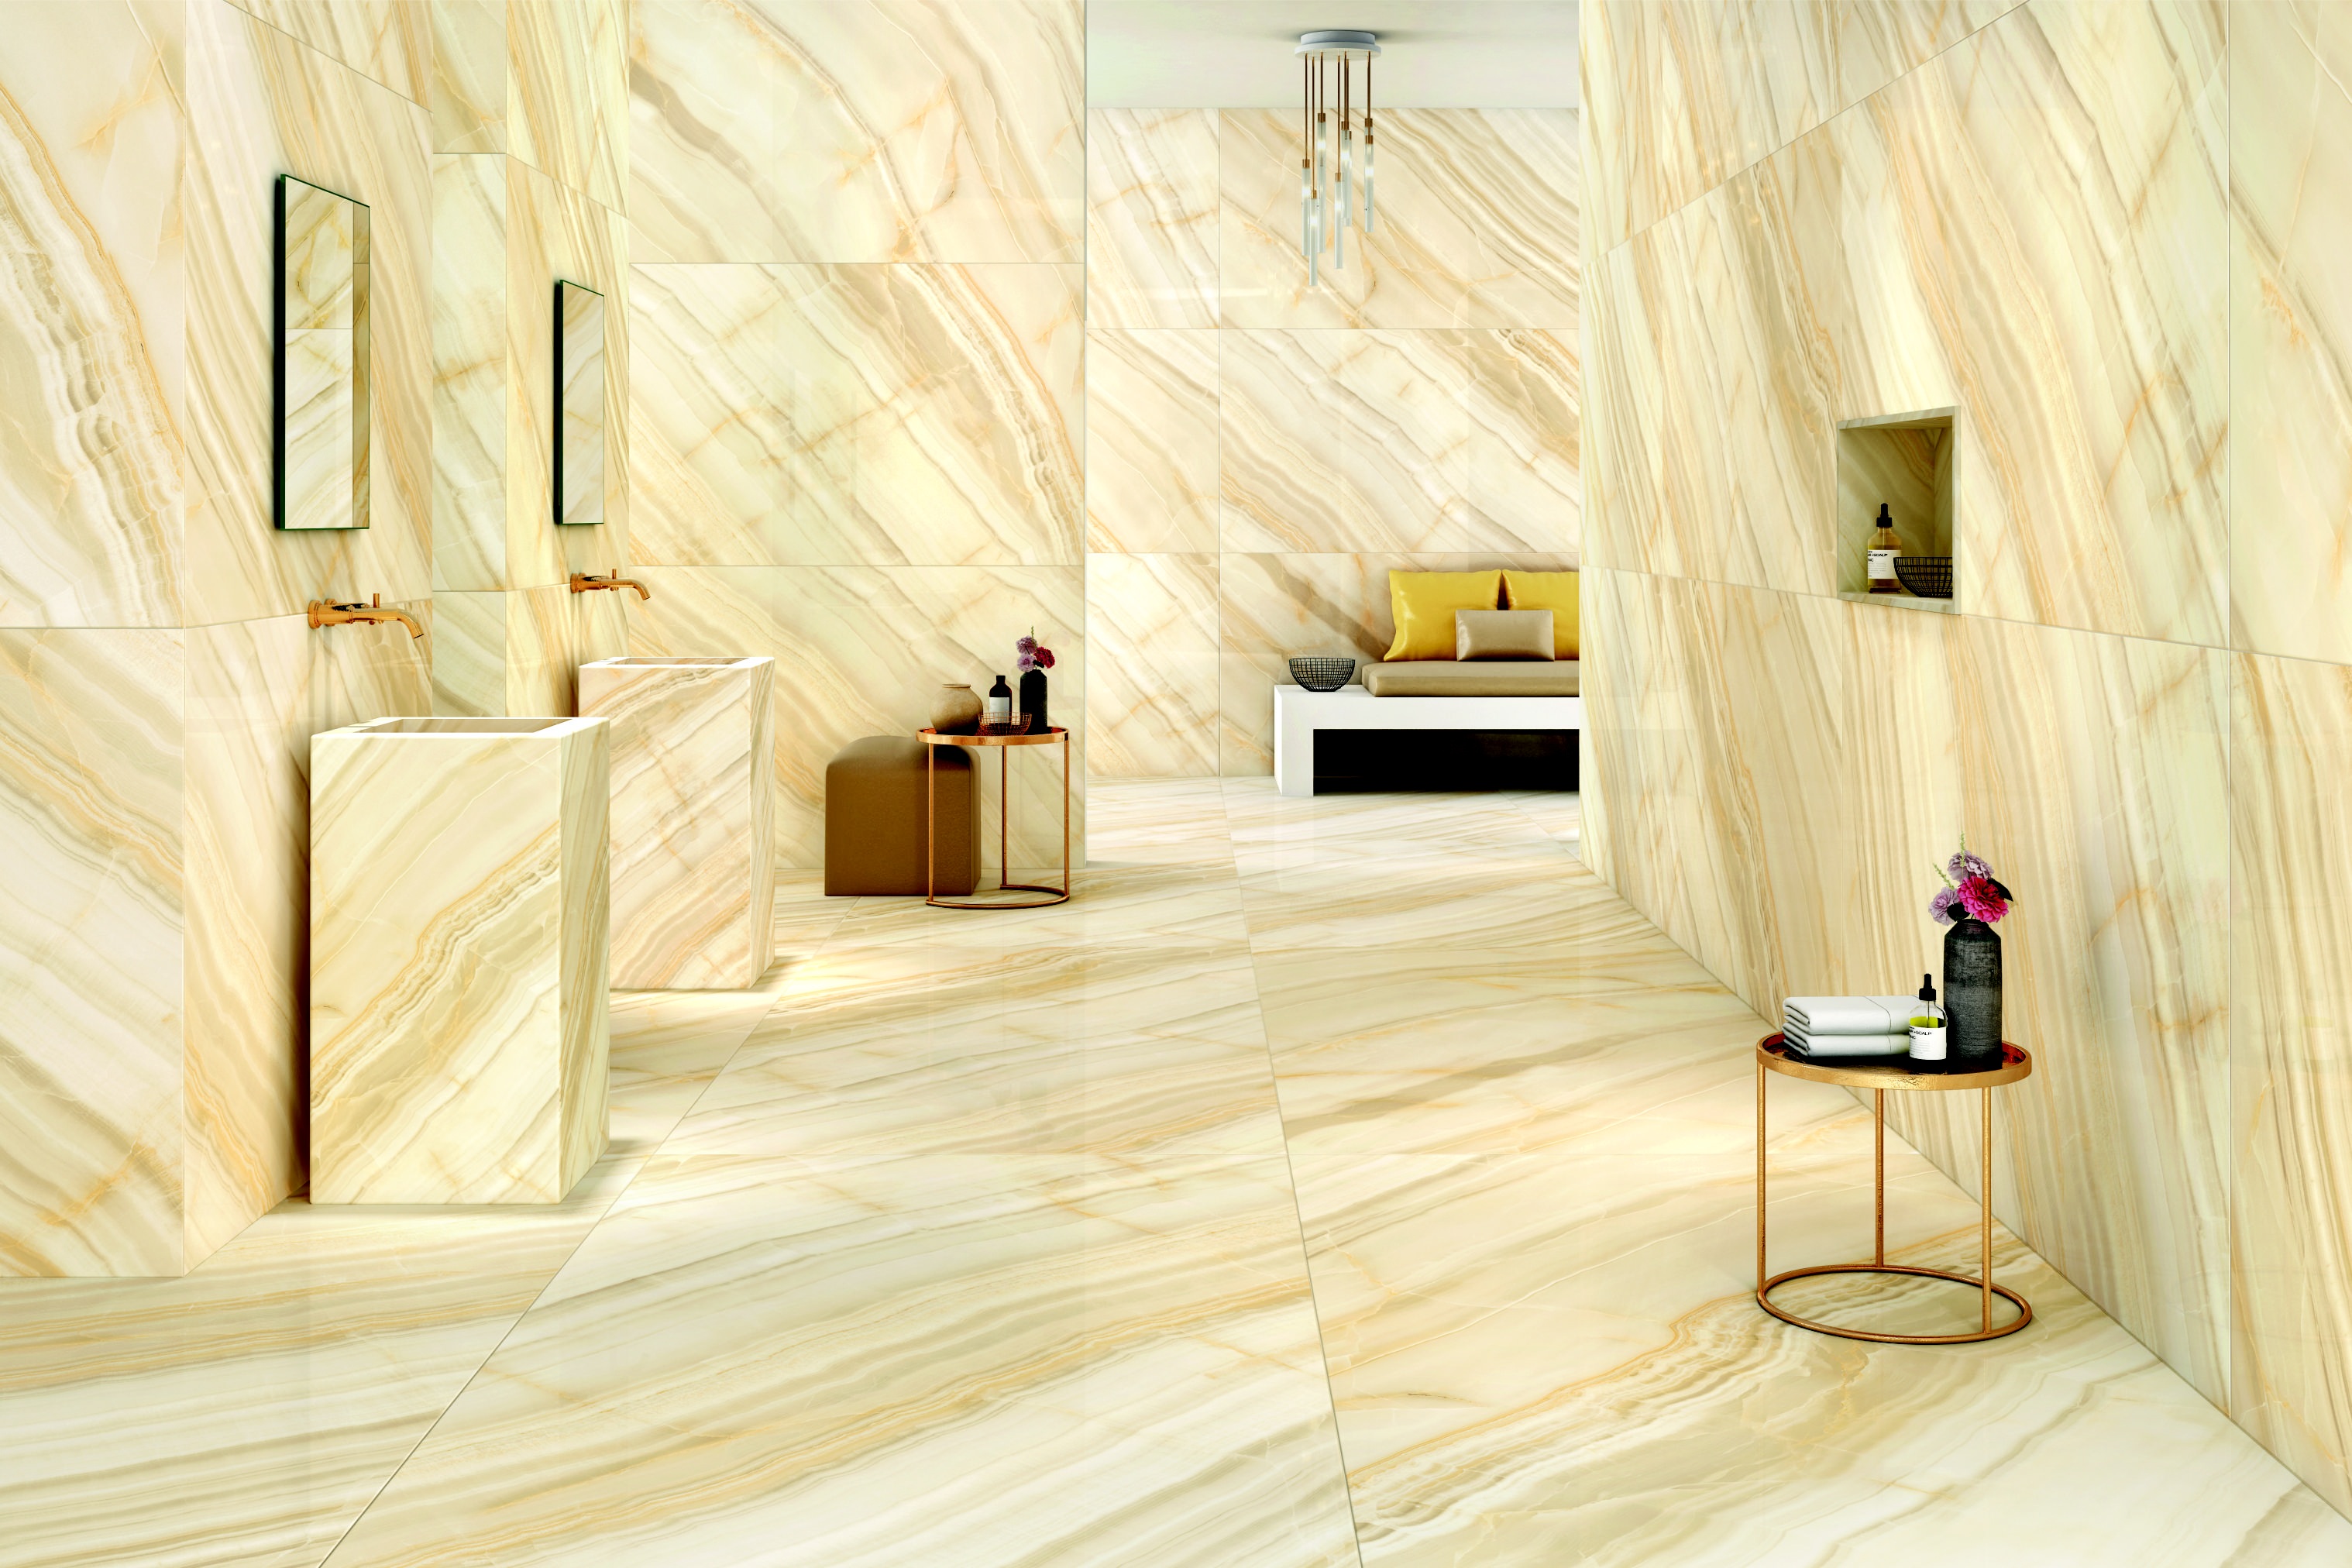 Bathroom Design Interior Luxury Marble Room Style 3036x2024